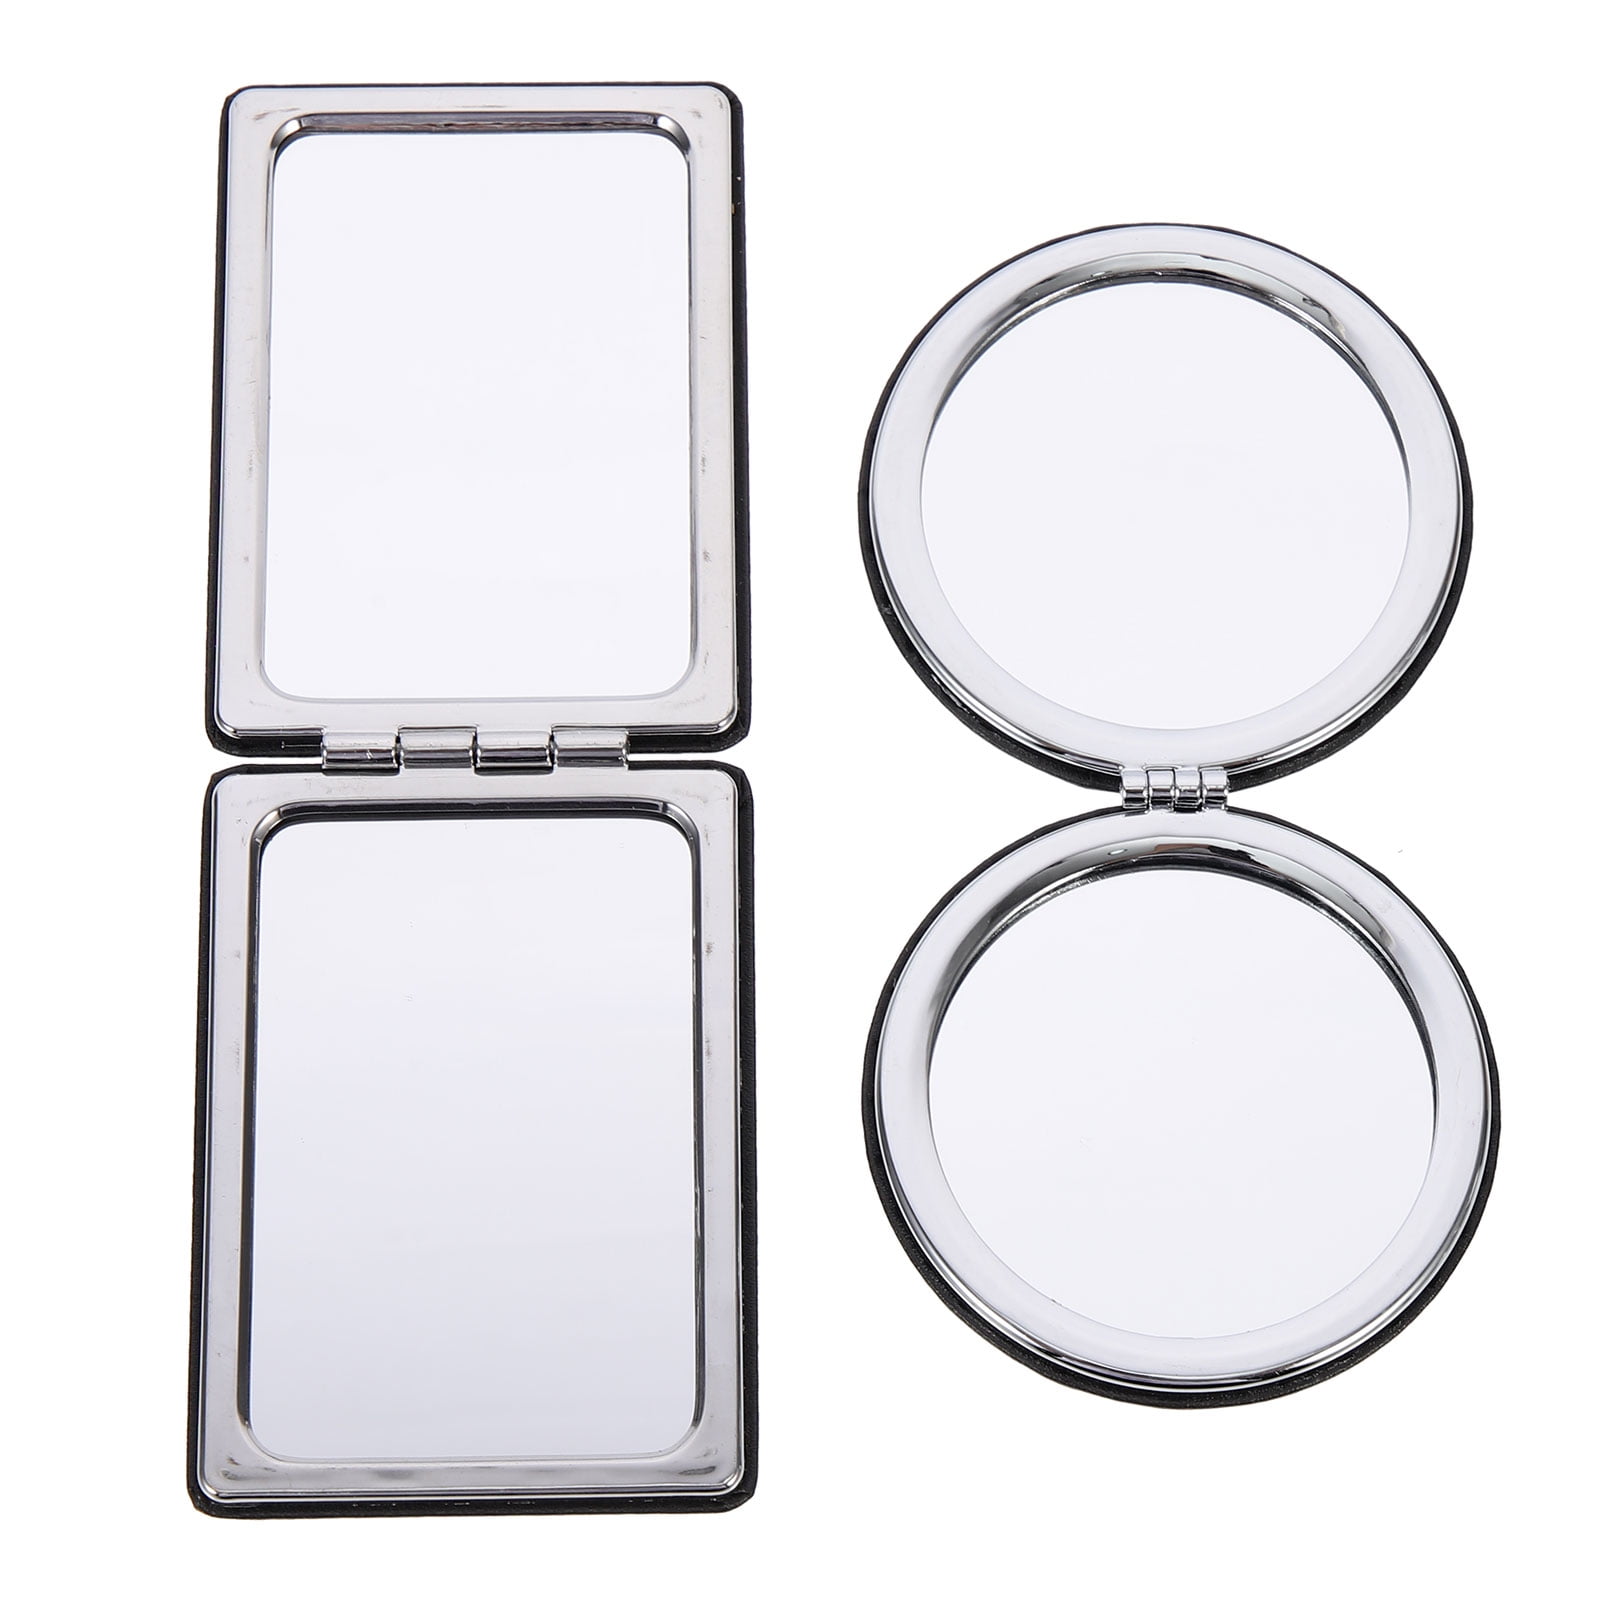 2Pcscosmetic mirror for purse handbag wallets for women small size Small  Purse | eBay